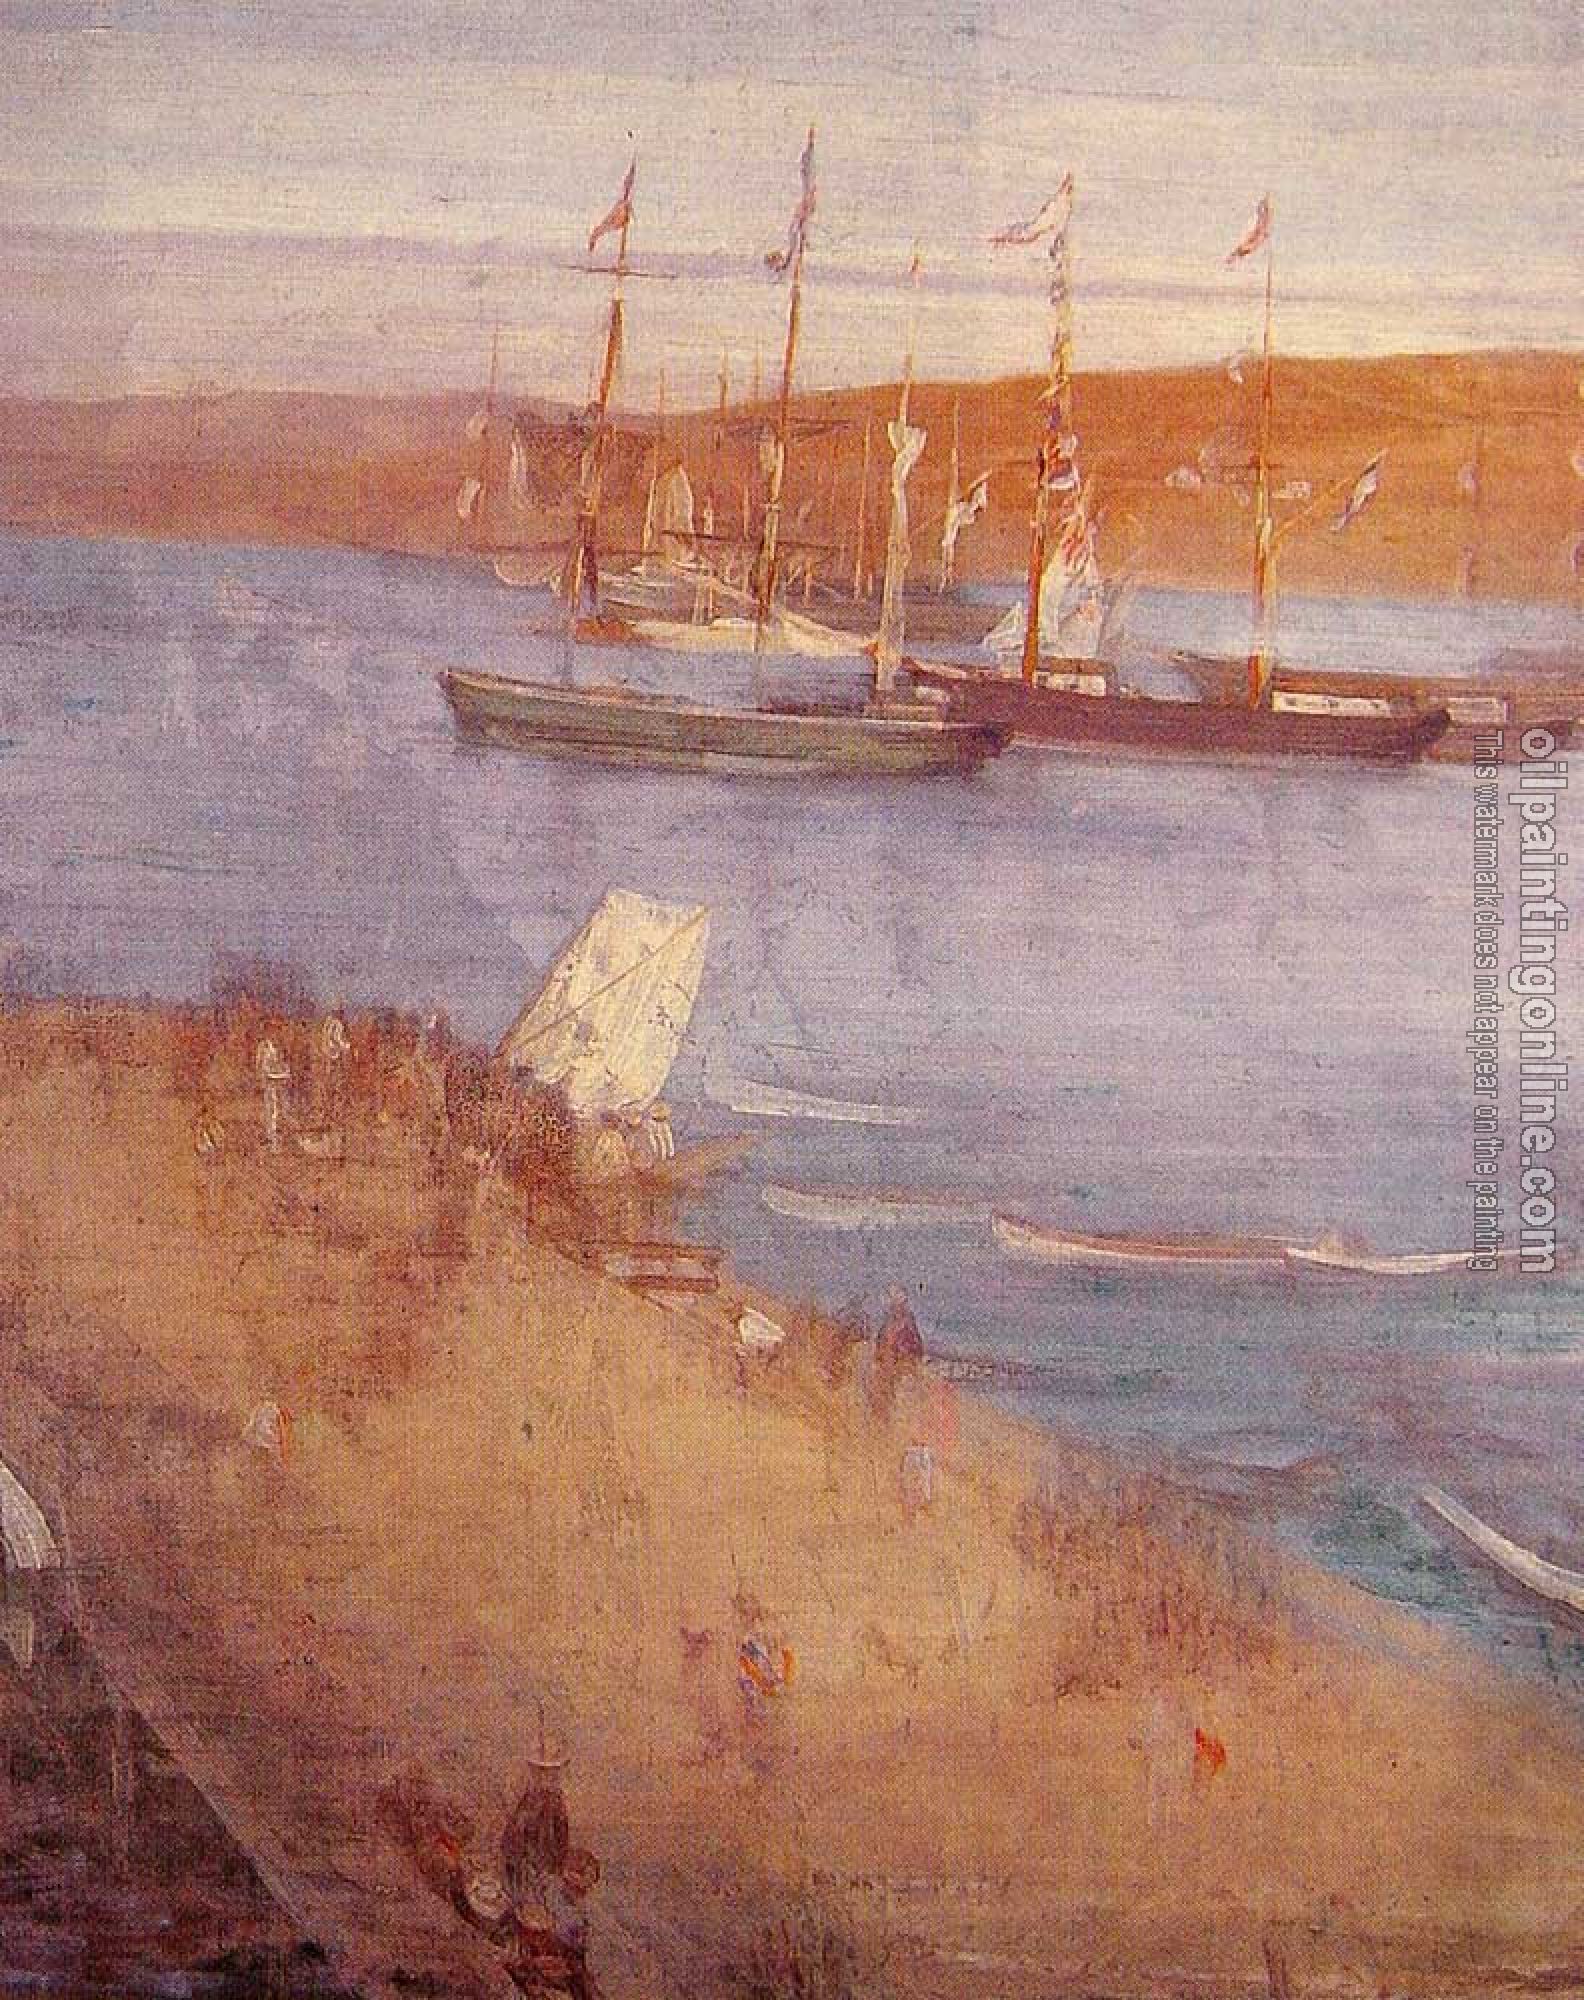 Whistler, James Abbottb McNeill - The Morning after the Revolution-Valparaiso